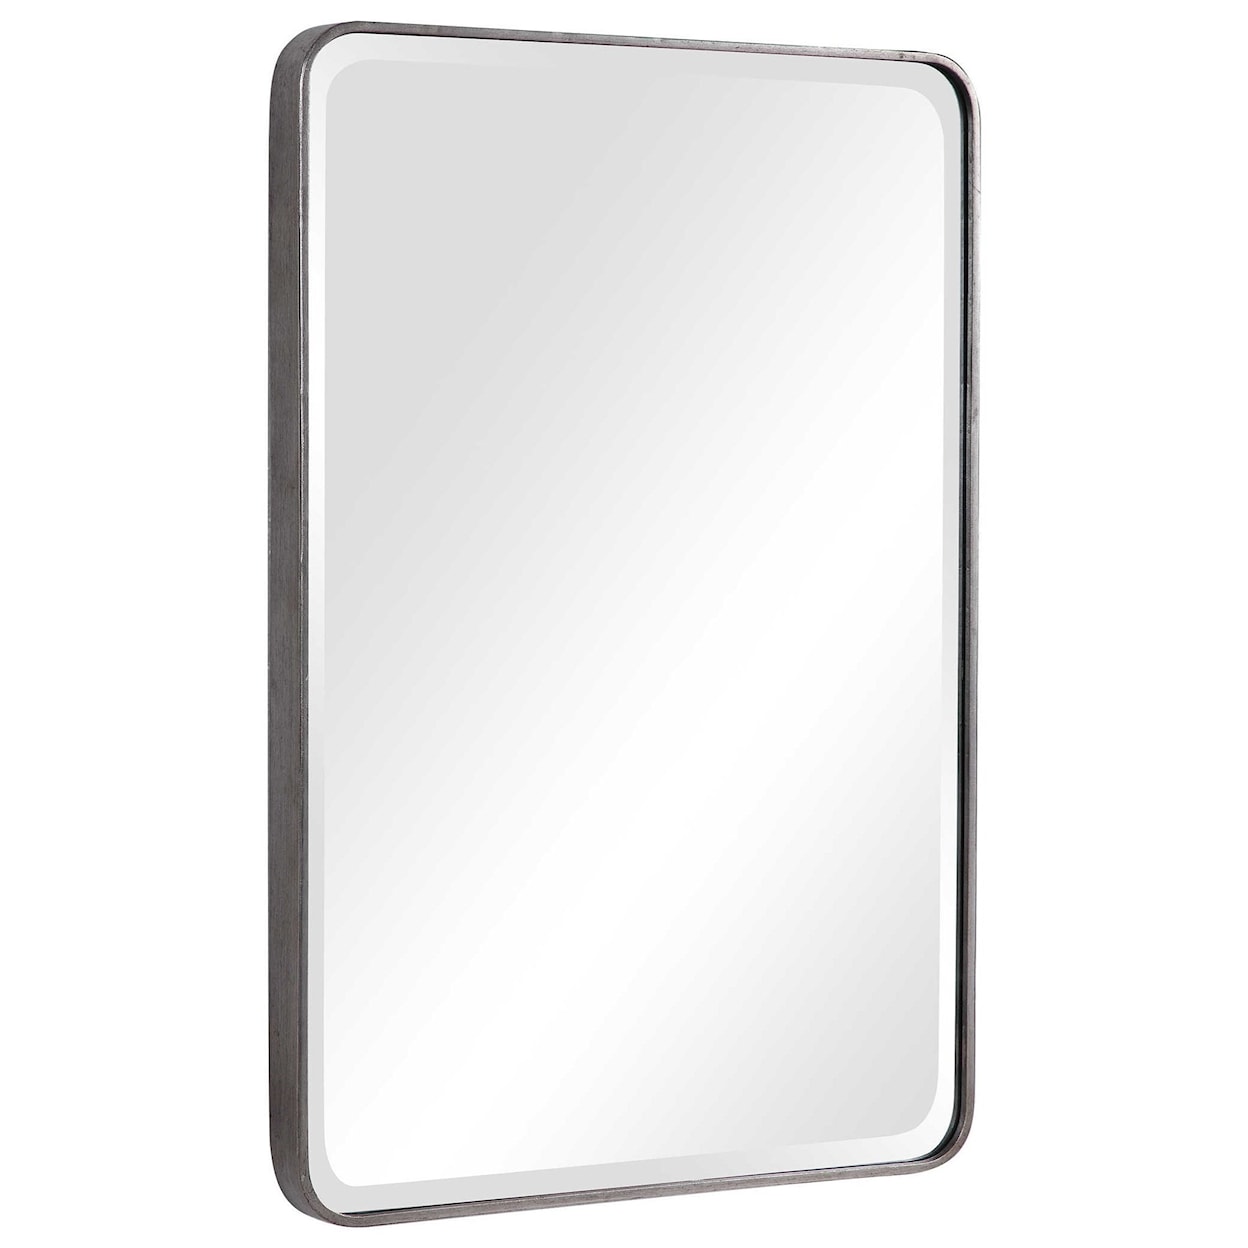 Uttermost Mirrors Aramis Silver Mirror